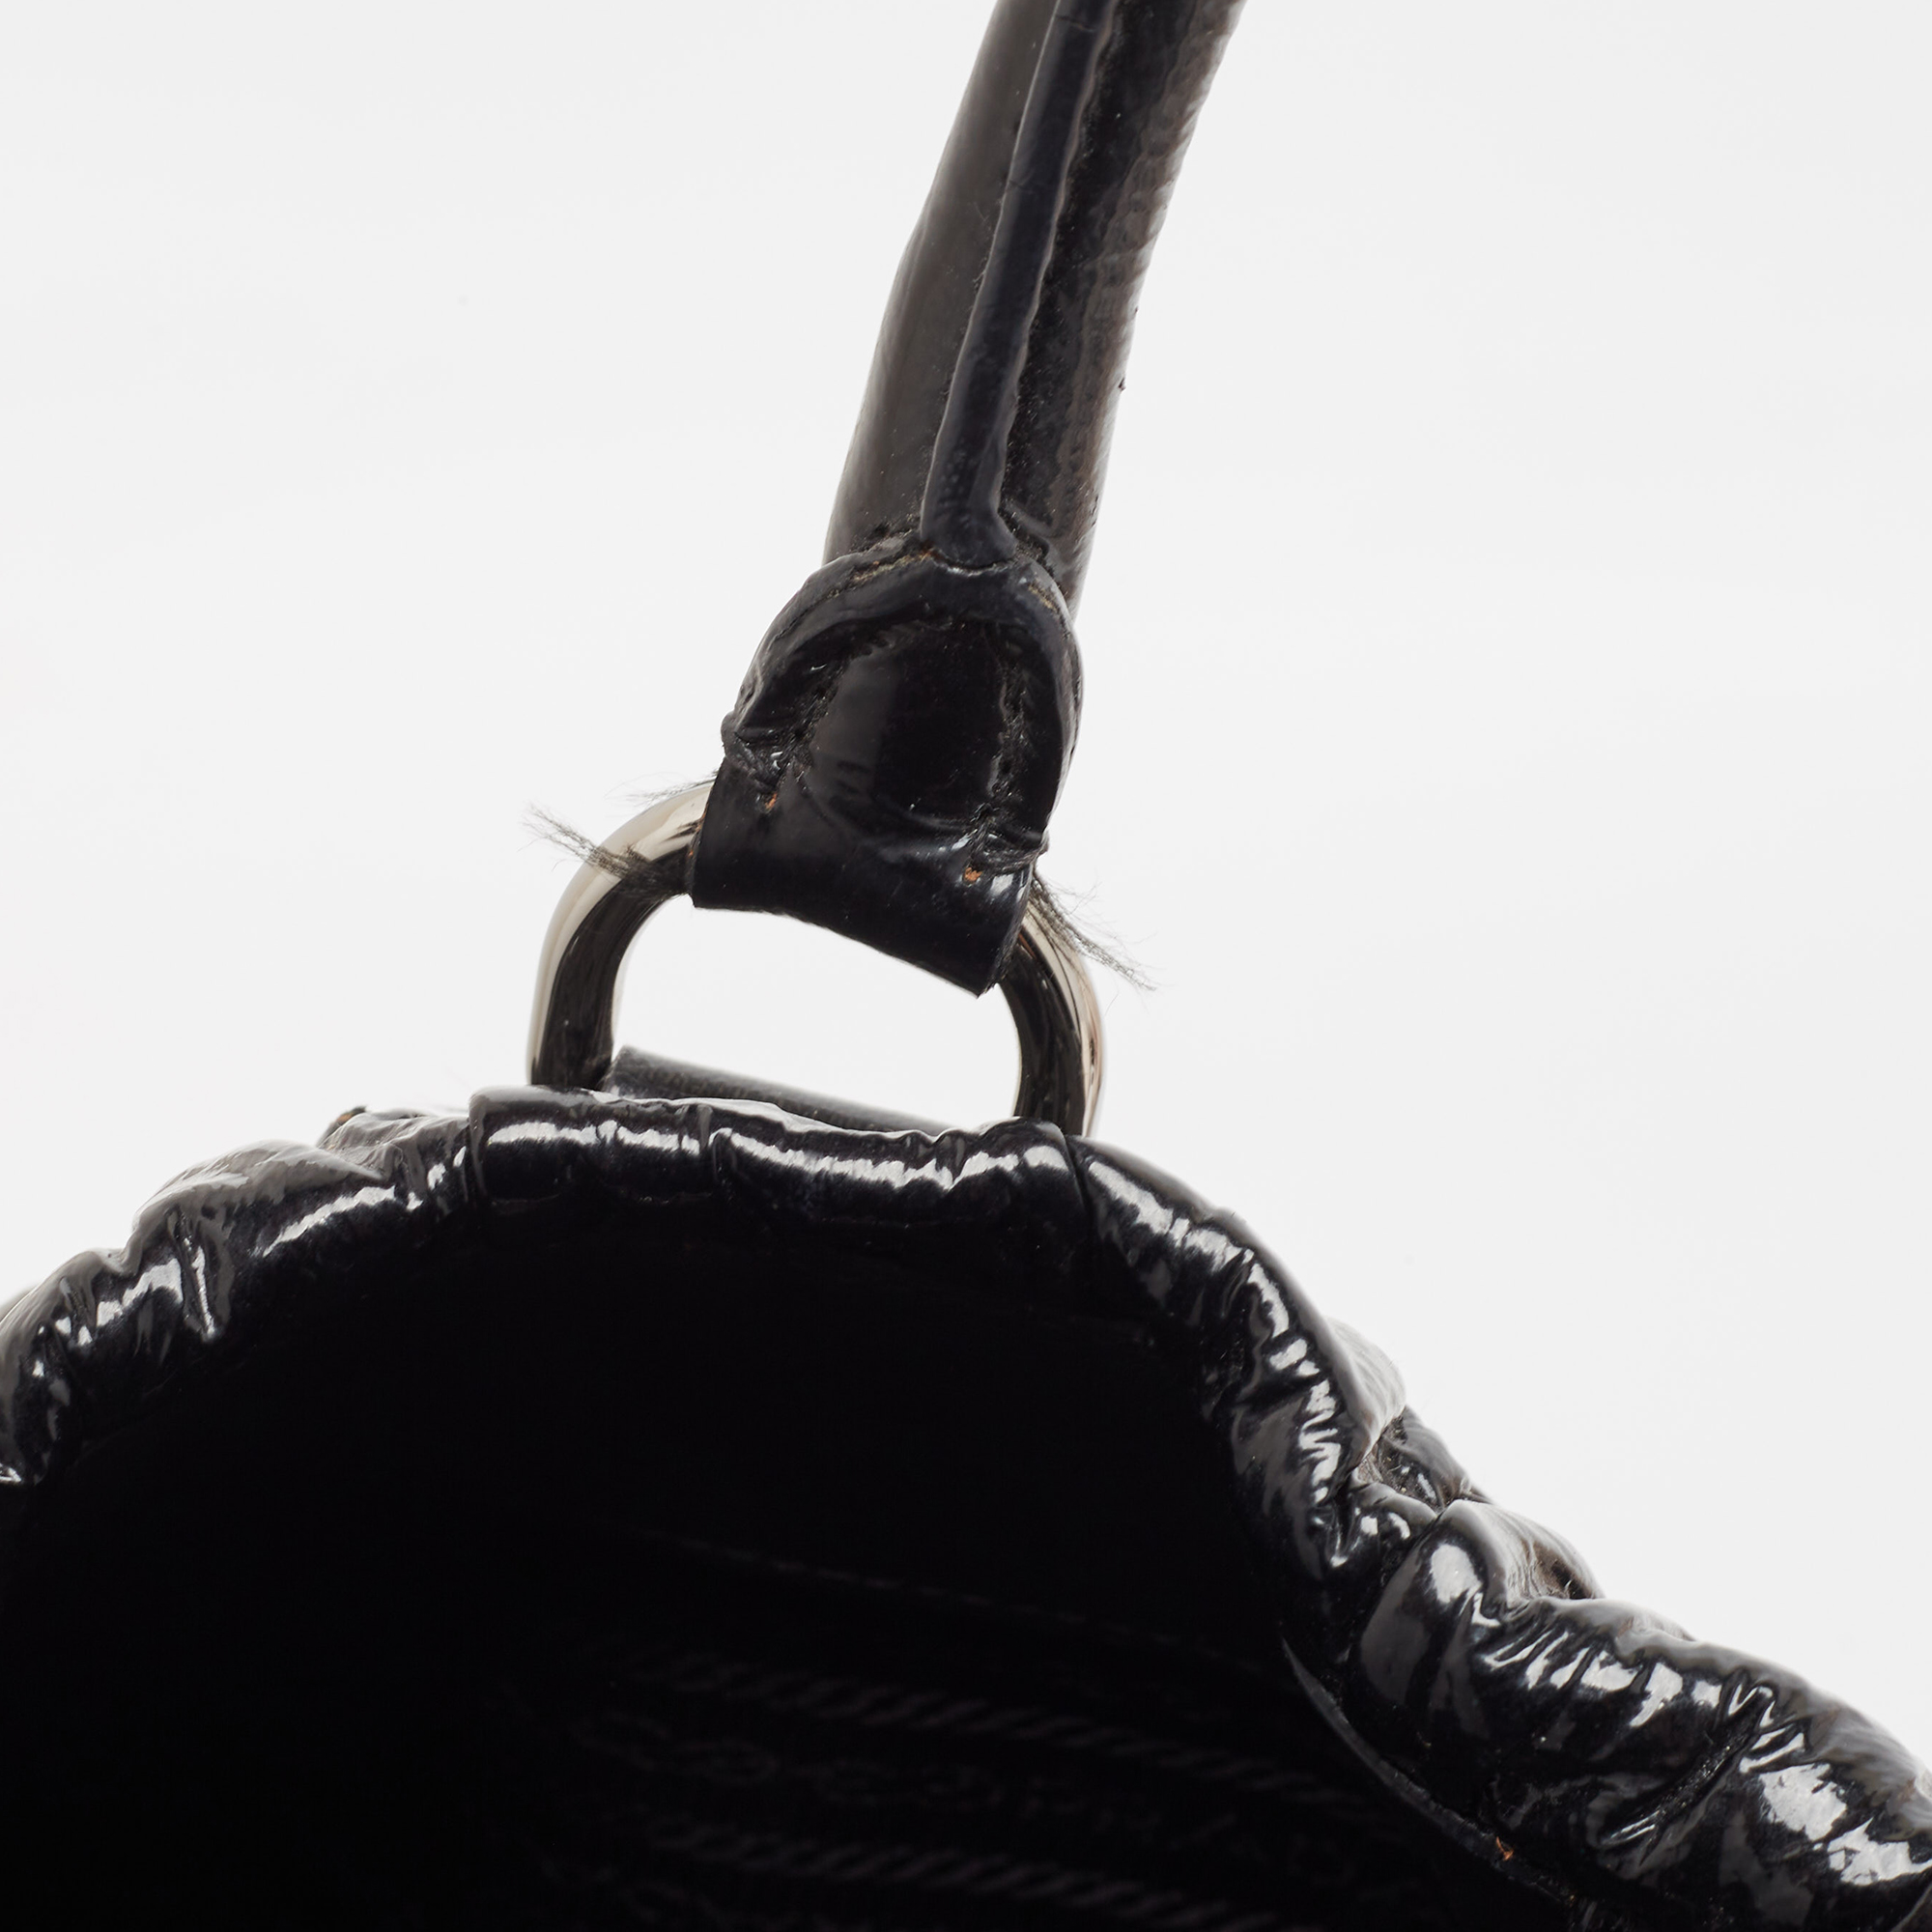 Prada Black Gaufre Patent Leather Large Tote